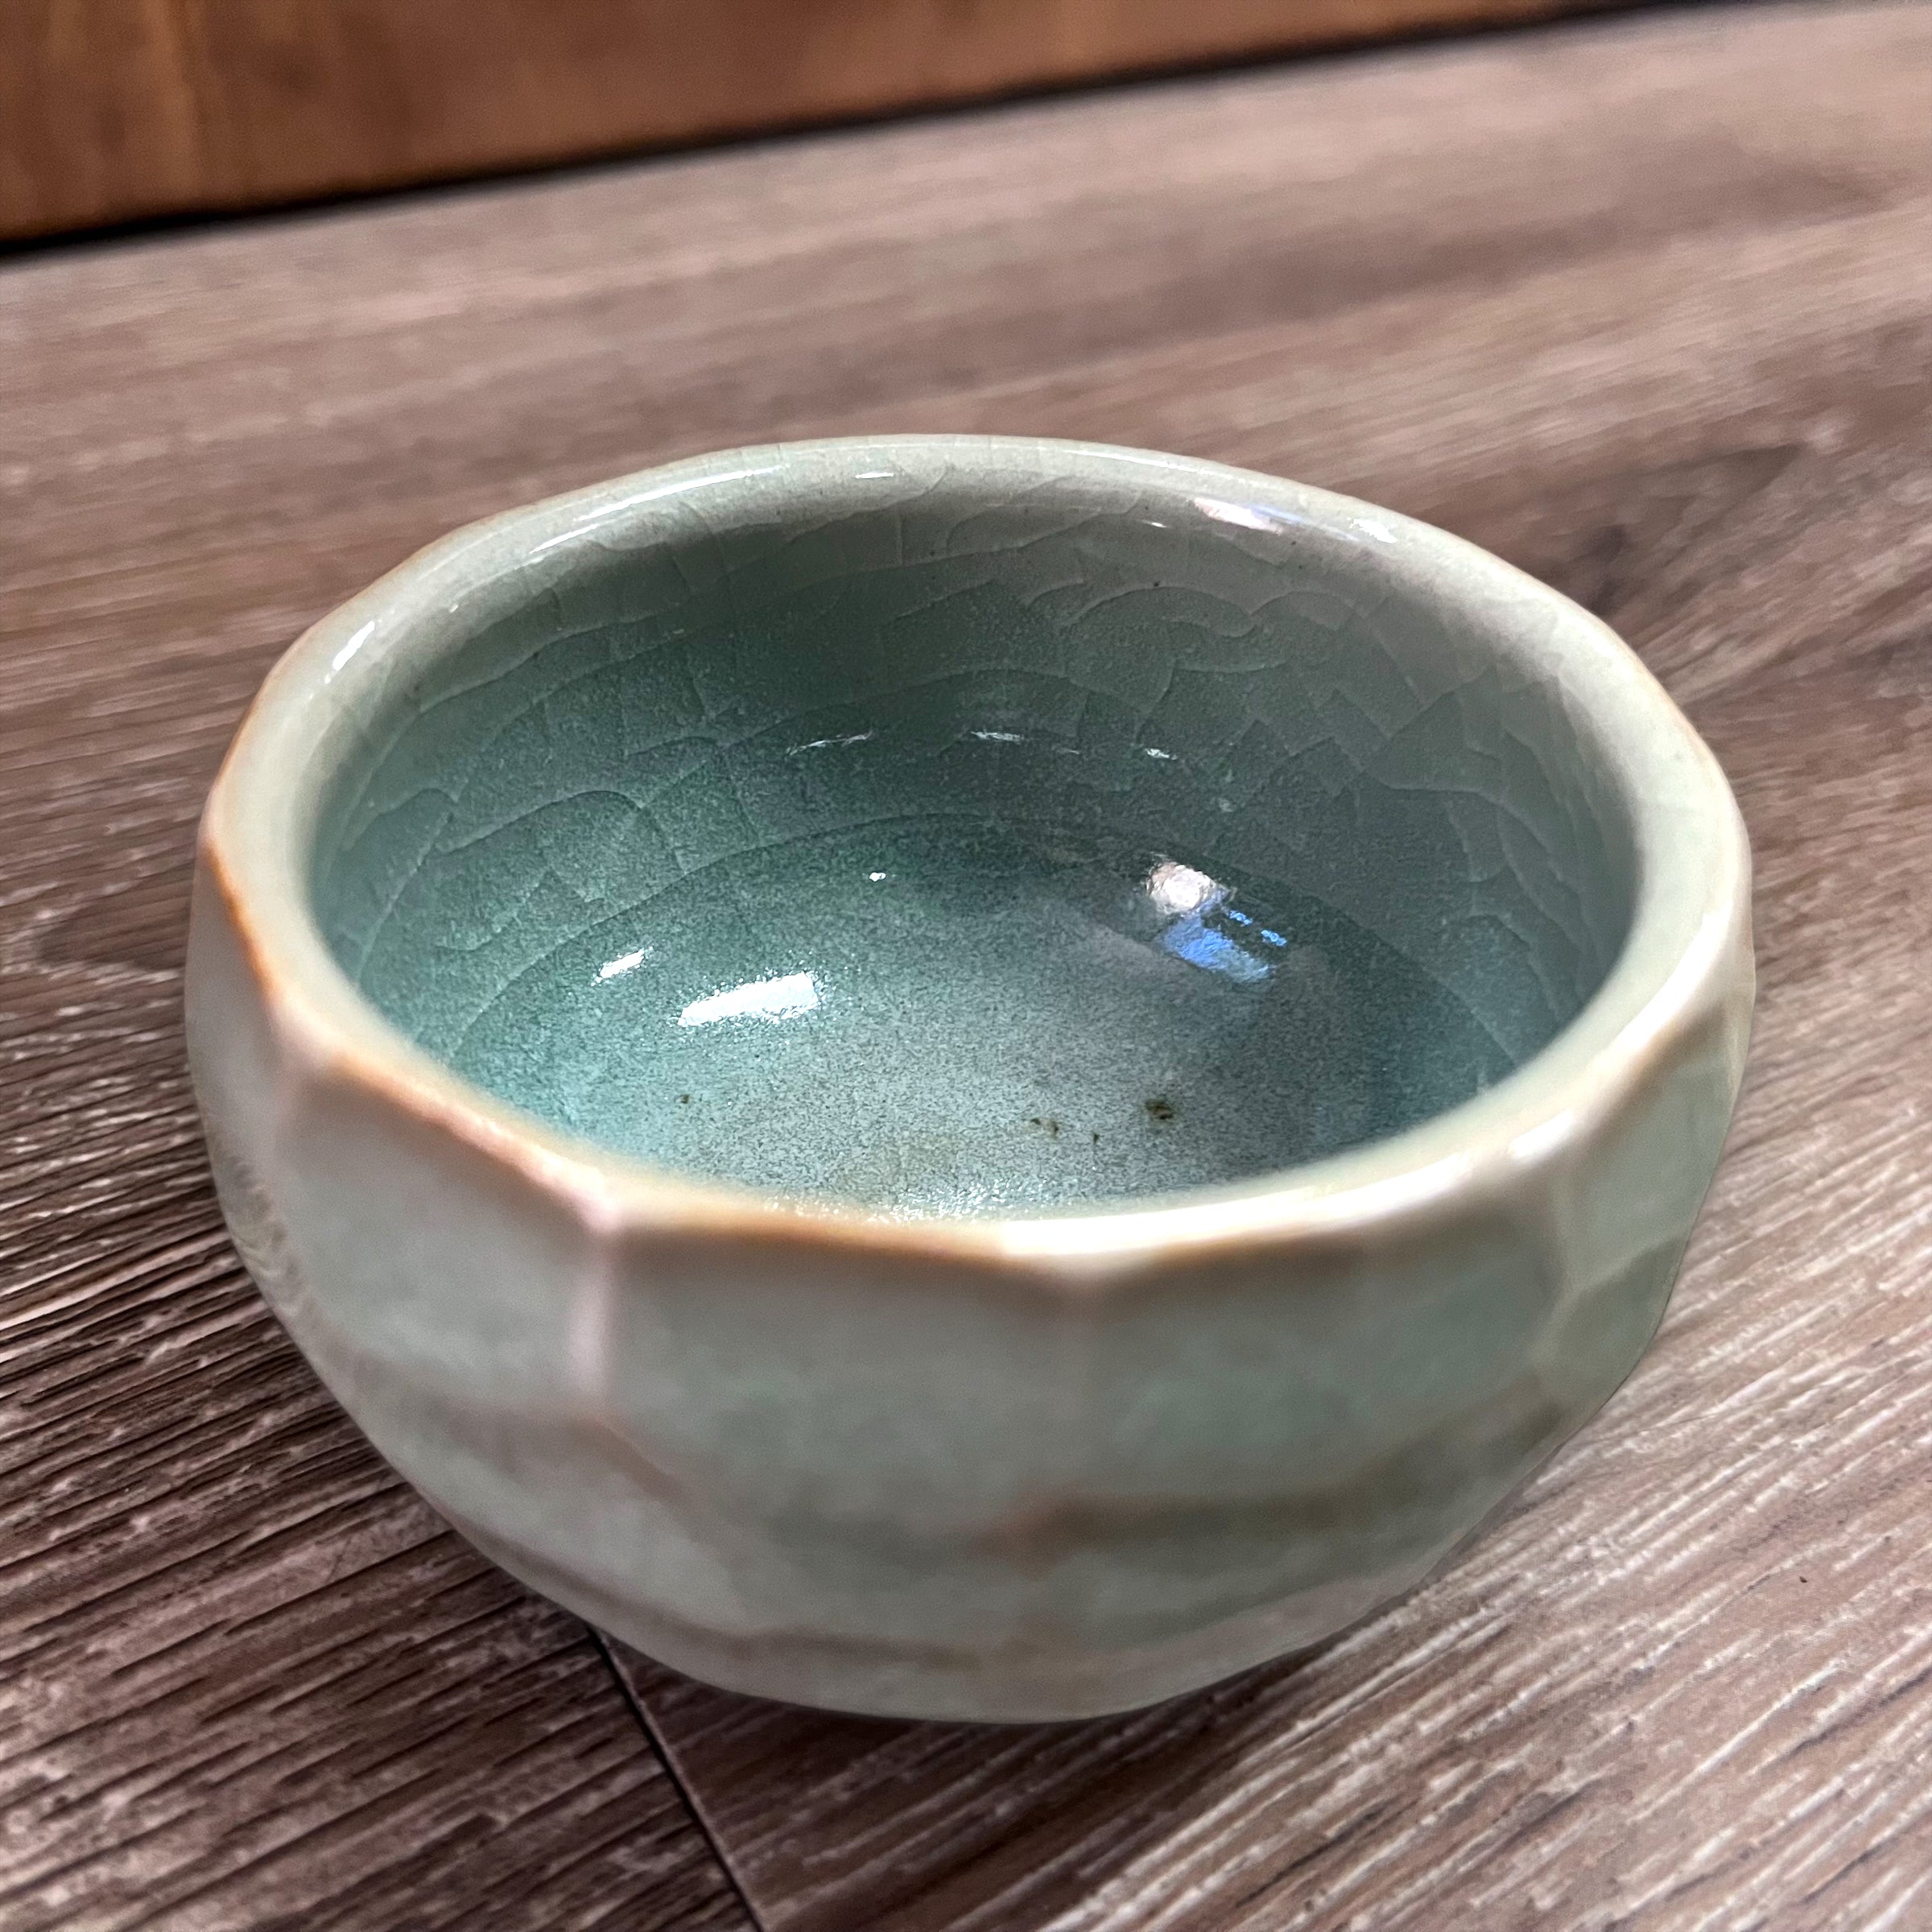 Taiwanese Handmade Wood-fired Ceramic Teacup - Ice Cracked Blue